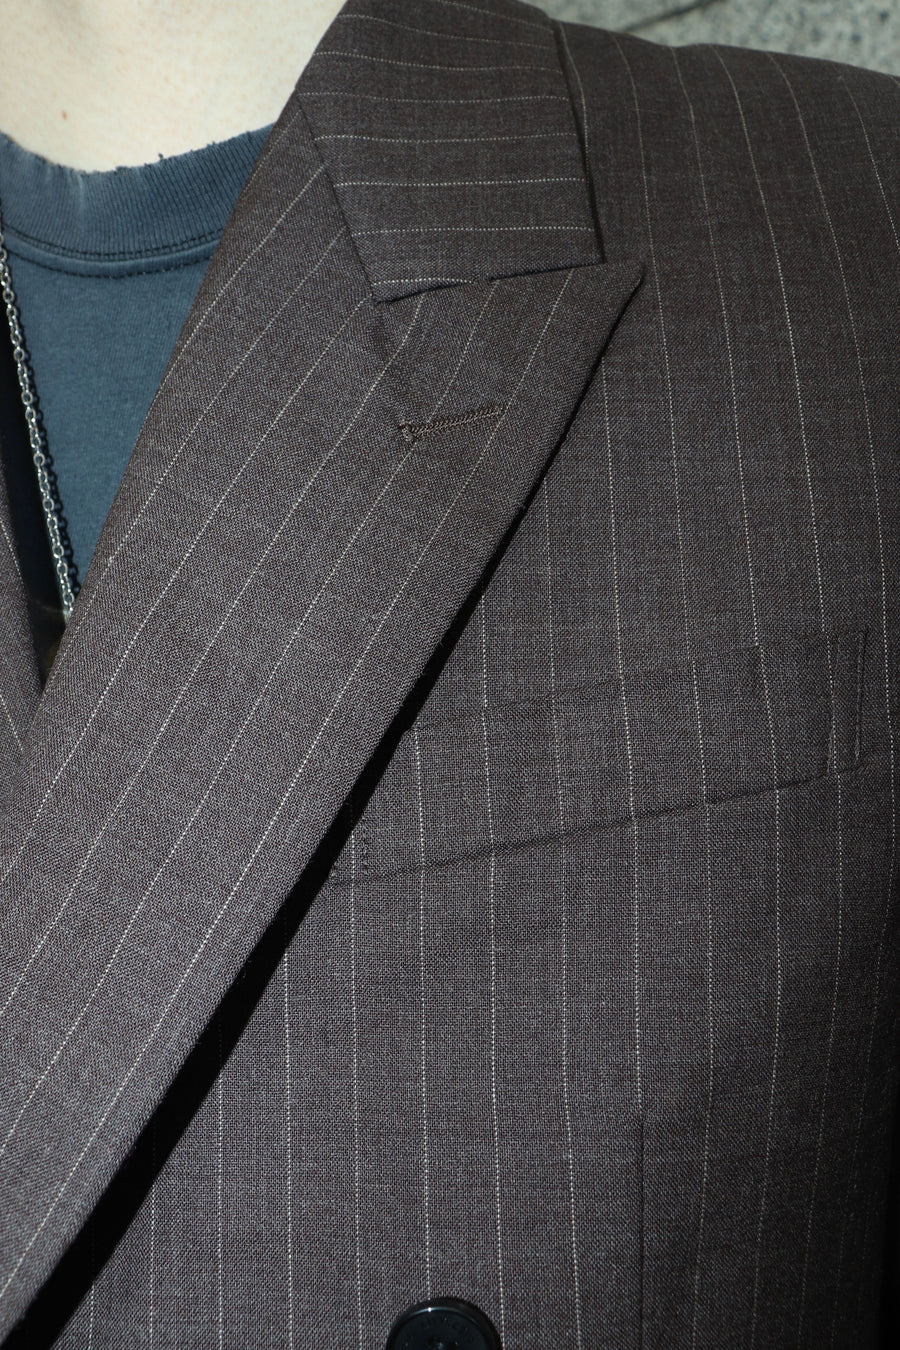 LITTLEBIG  Chalk Stripe 6B Jacket(Brown)